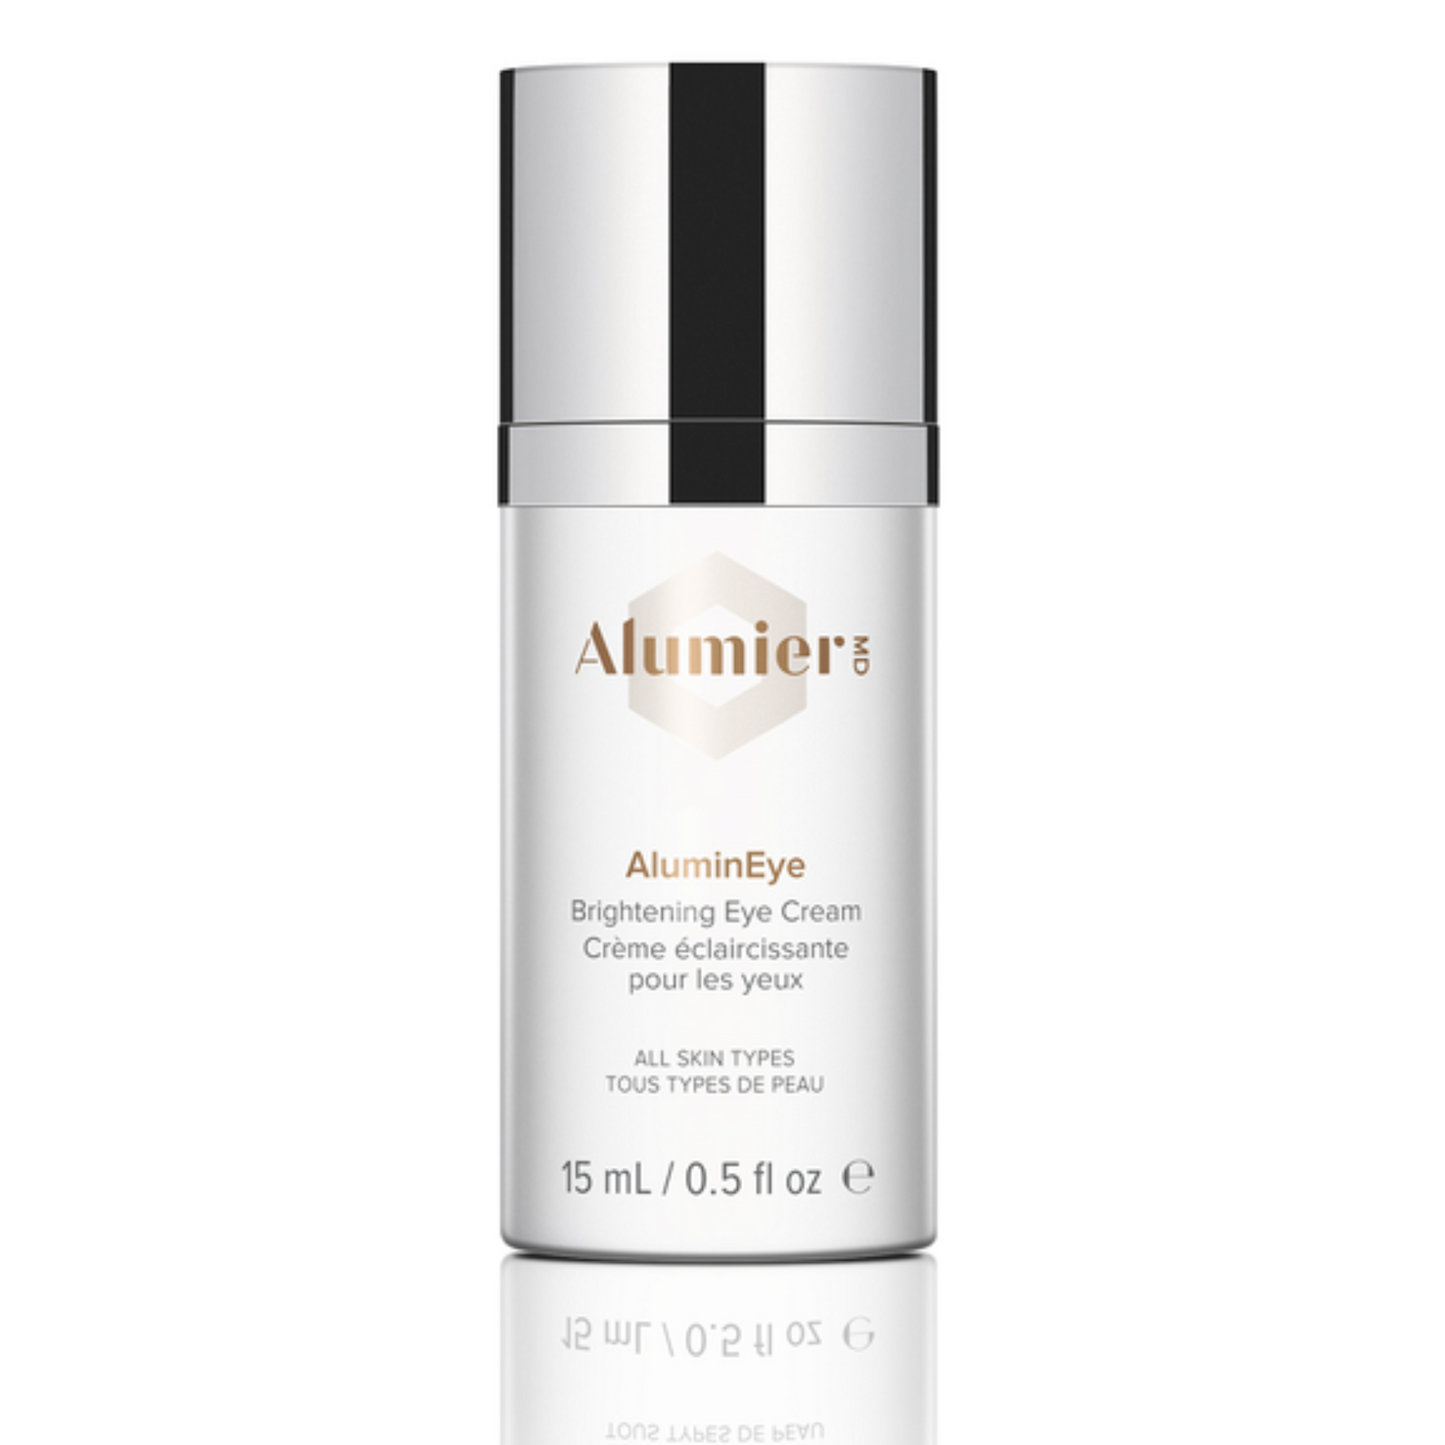 AluminEye Brightening Eye Cream